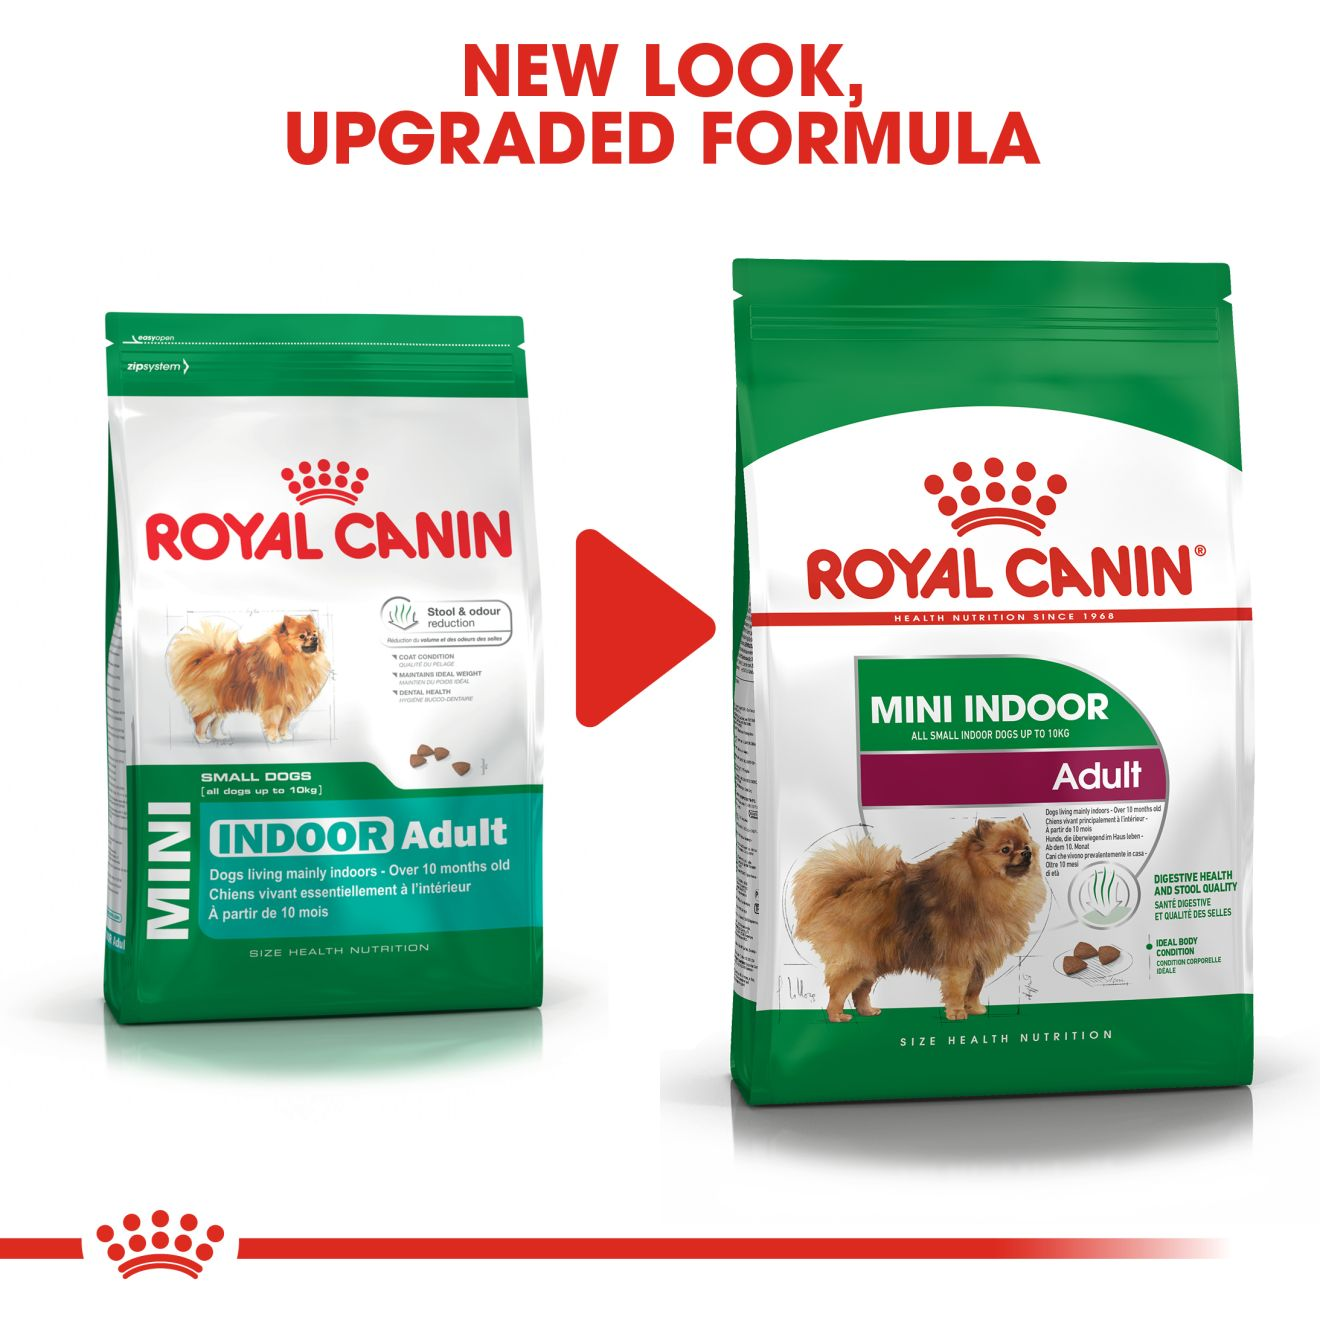 royal canin digestive care mini